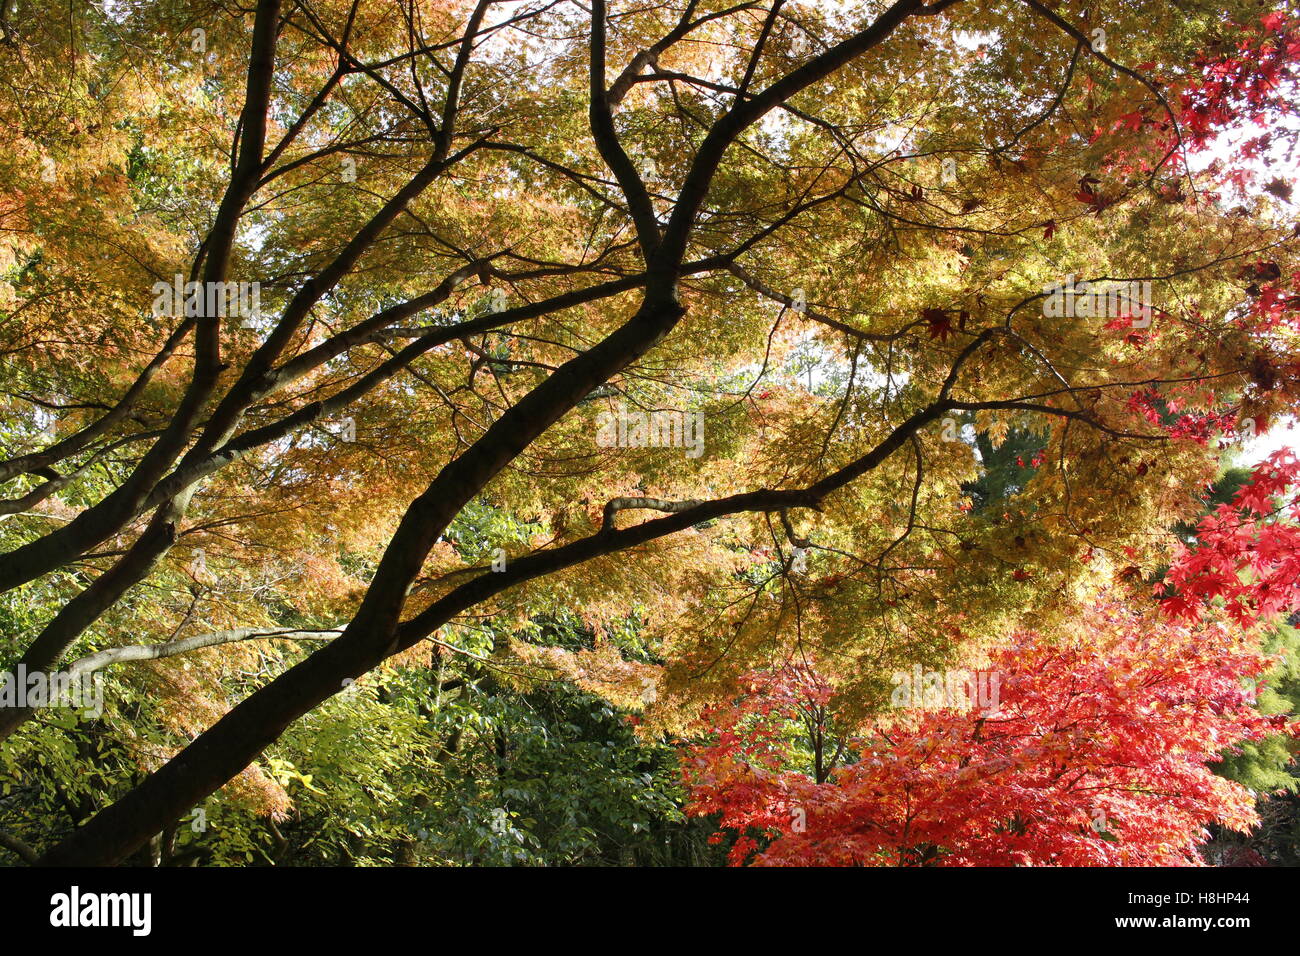 Beautiful Autumn / Fall leaves on park trees, Roath Park arboretum, Cardiff. Stock Photo